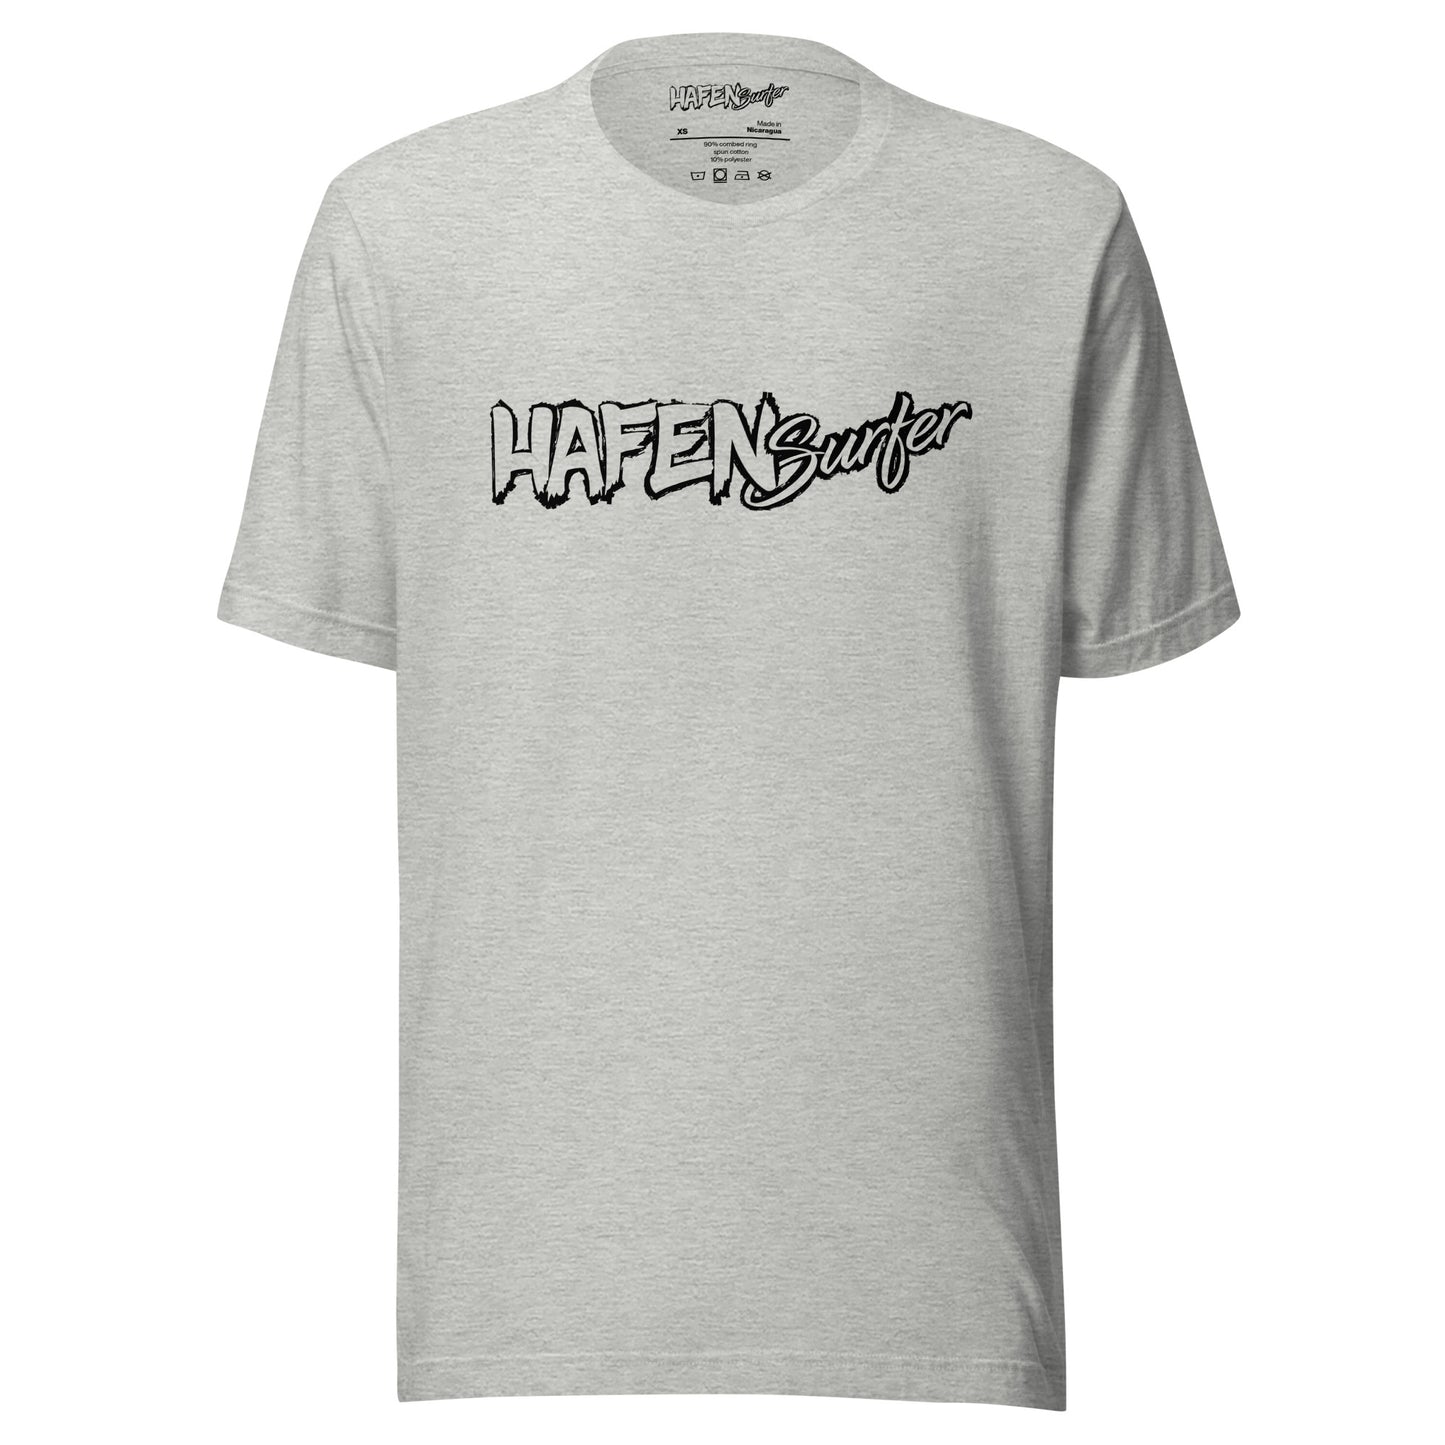 Hafensurfer Multic. Unisex T-Shirt Simple Style